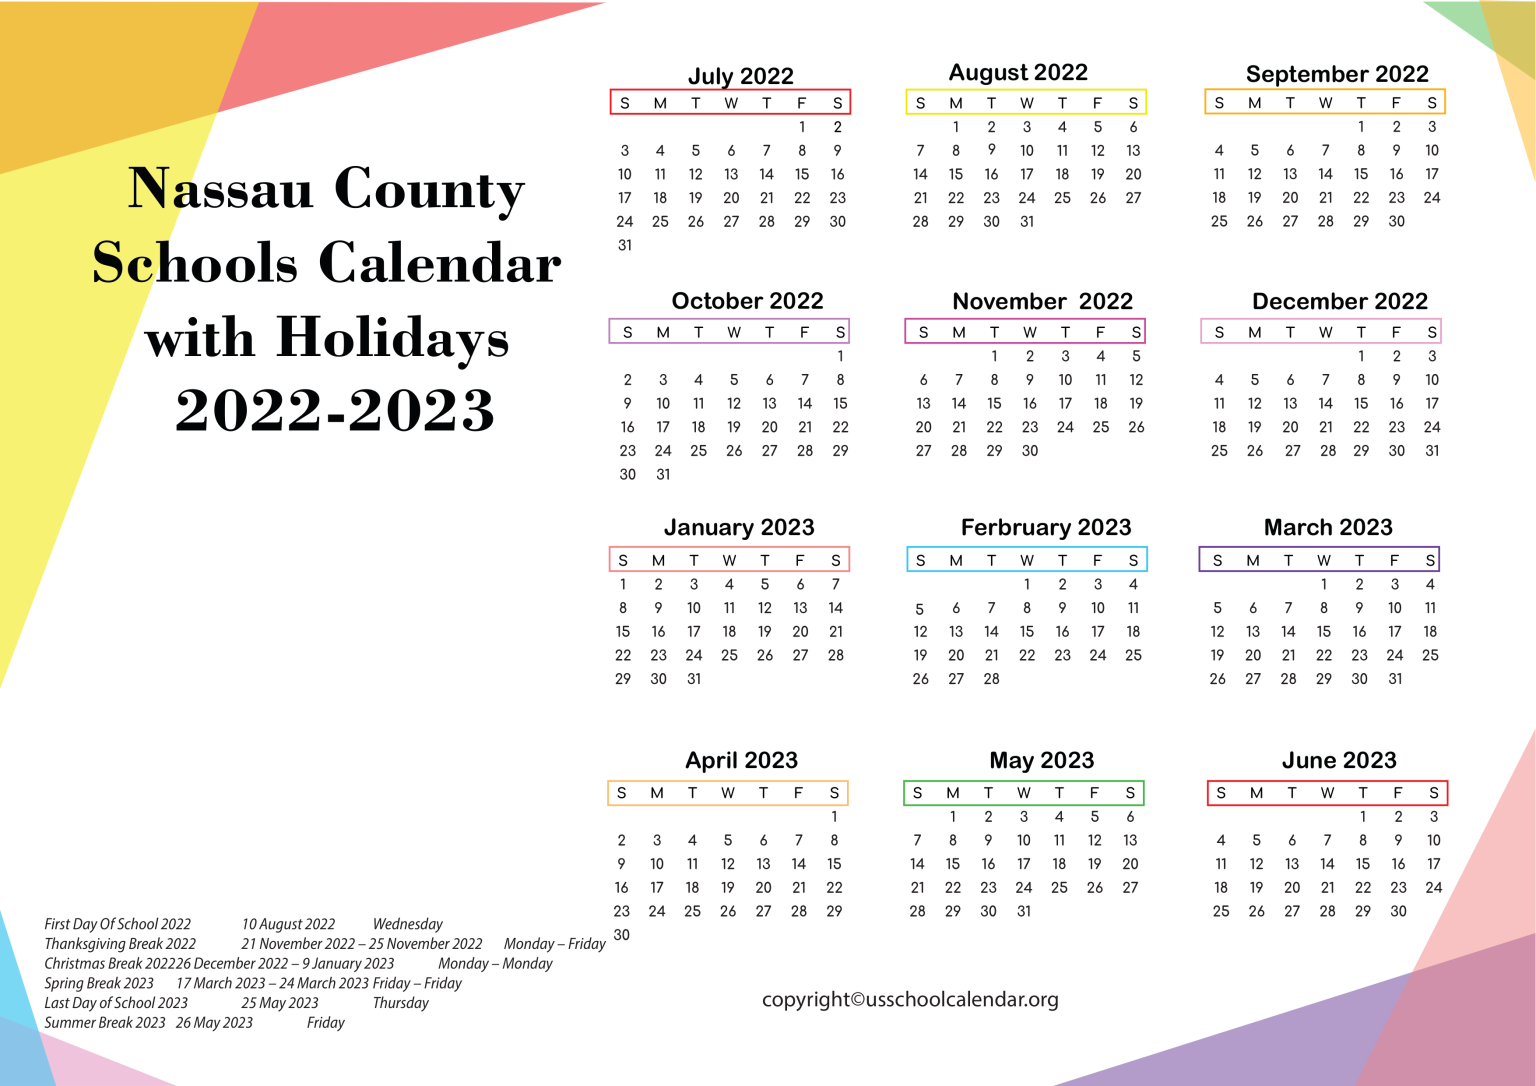 nassau-county-schools-calendar-with-holidays-2022-2023